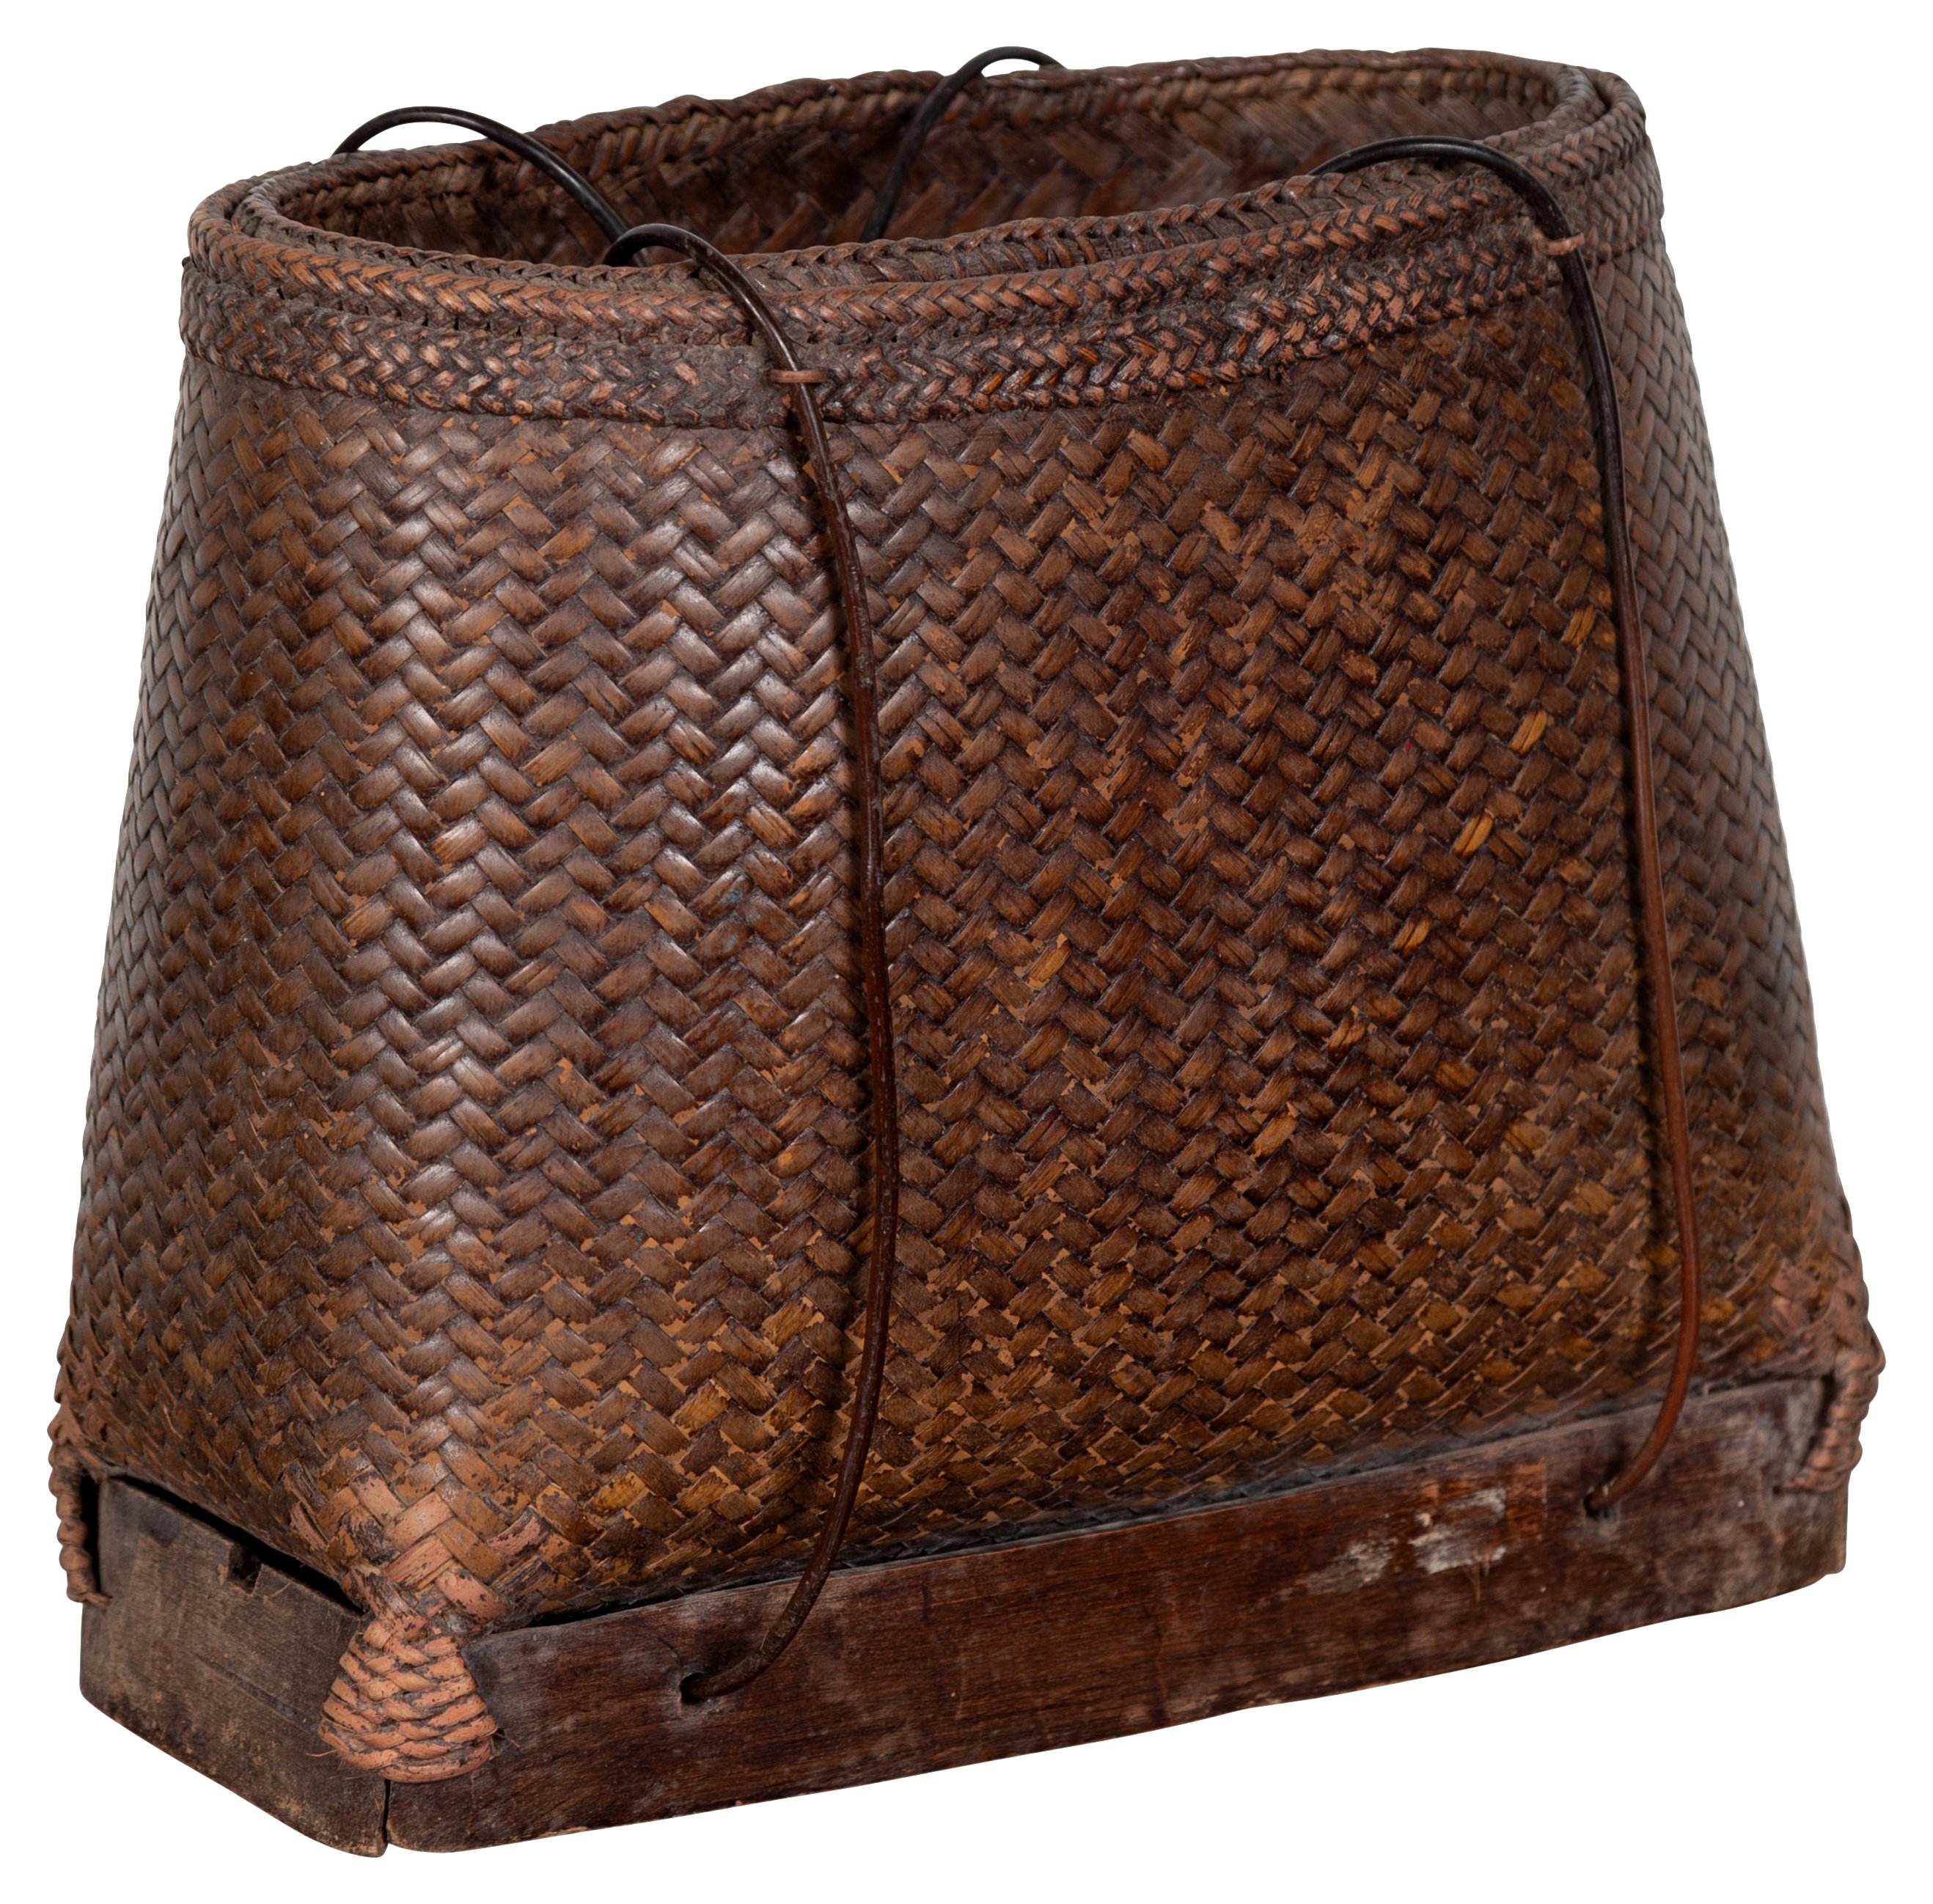 Small Antique Hand-Woven Grain Basket~P77555843